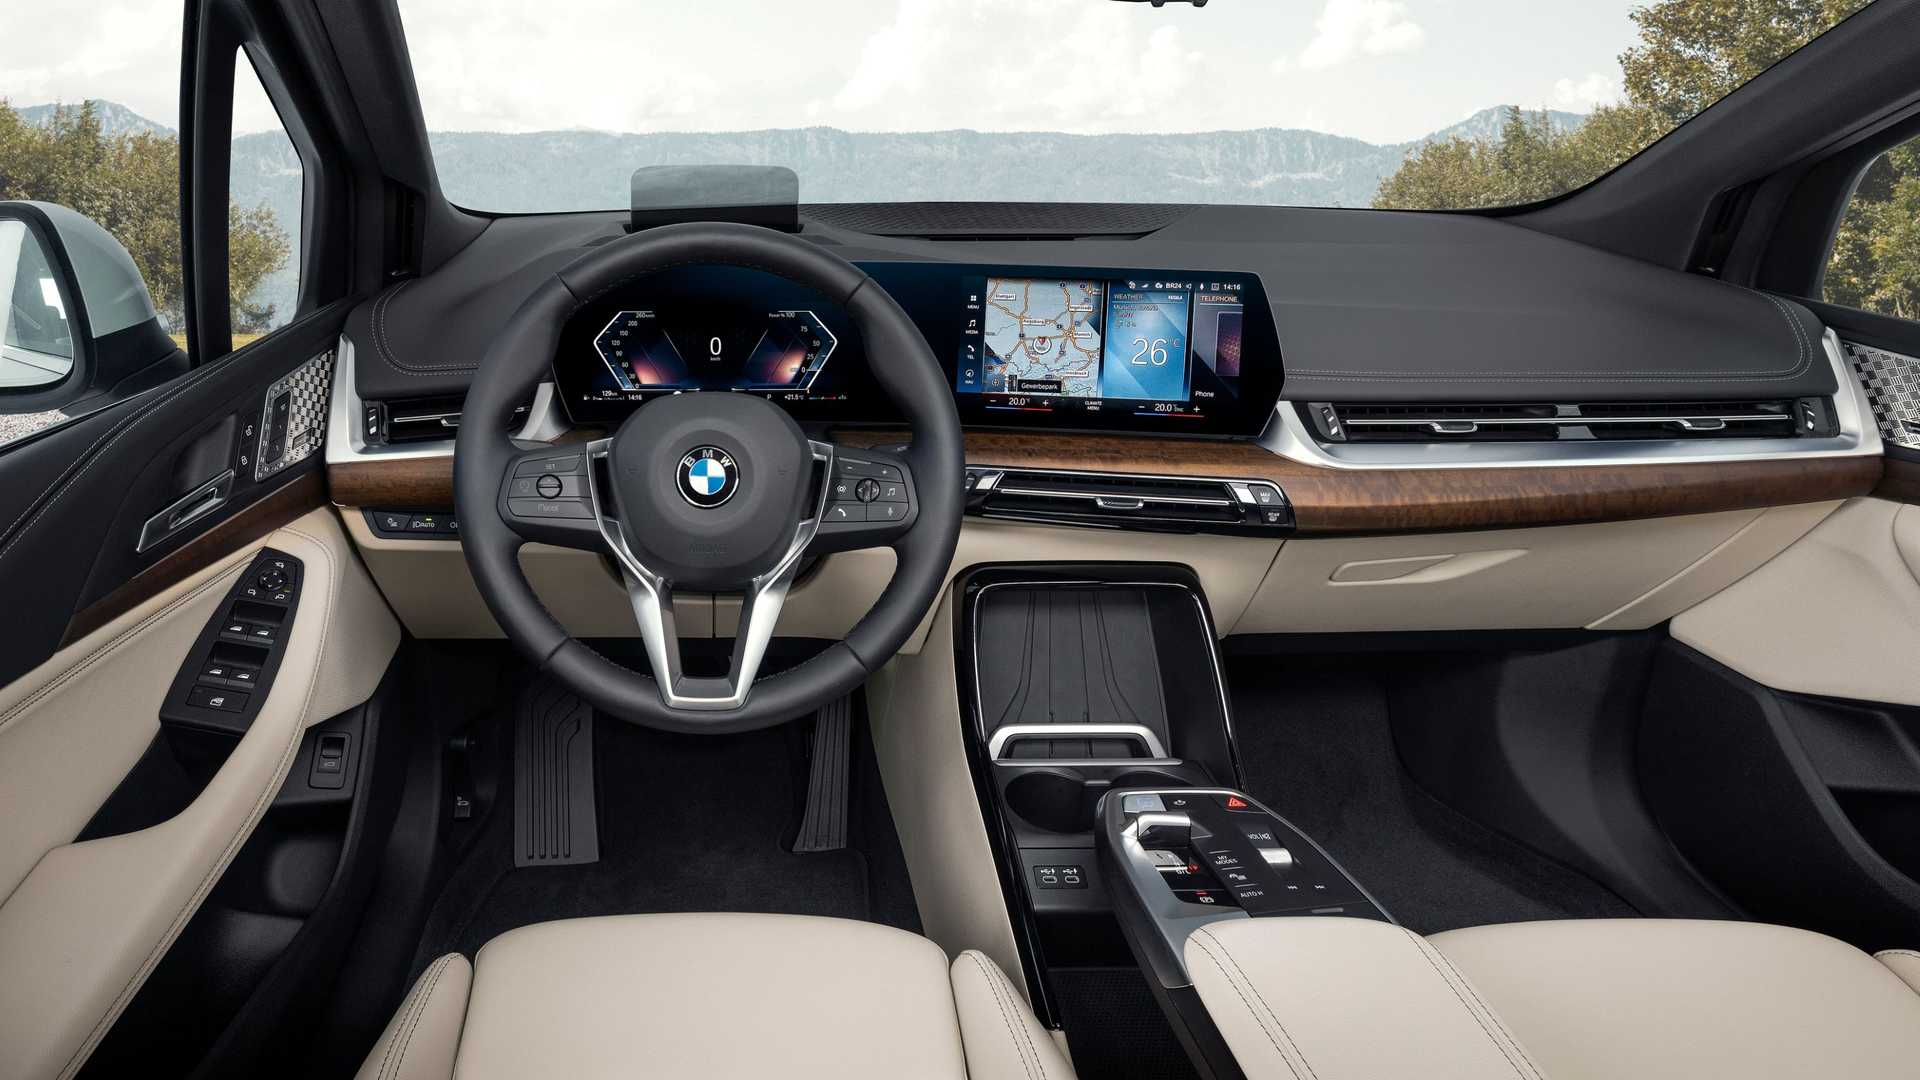 BMW Serie 2 active tourer interior